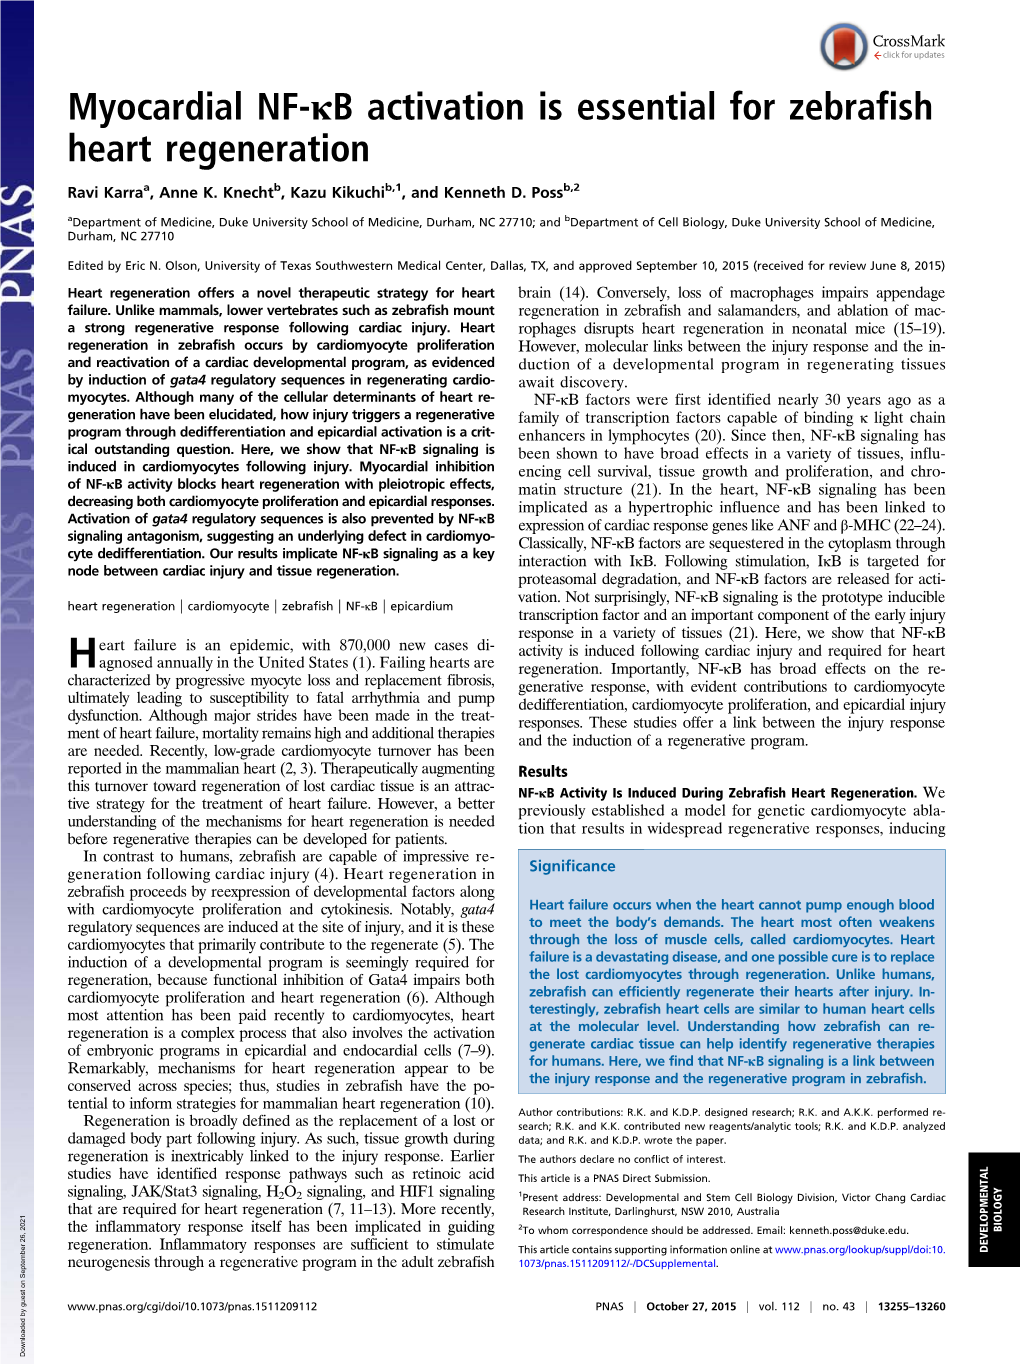 Myocardial NF-Κb Activation Is Essential for Zebrafish Heart Regeneration